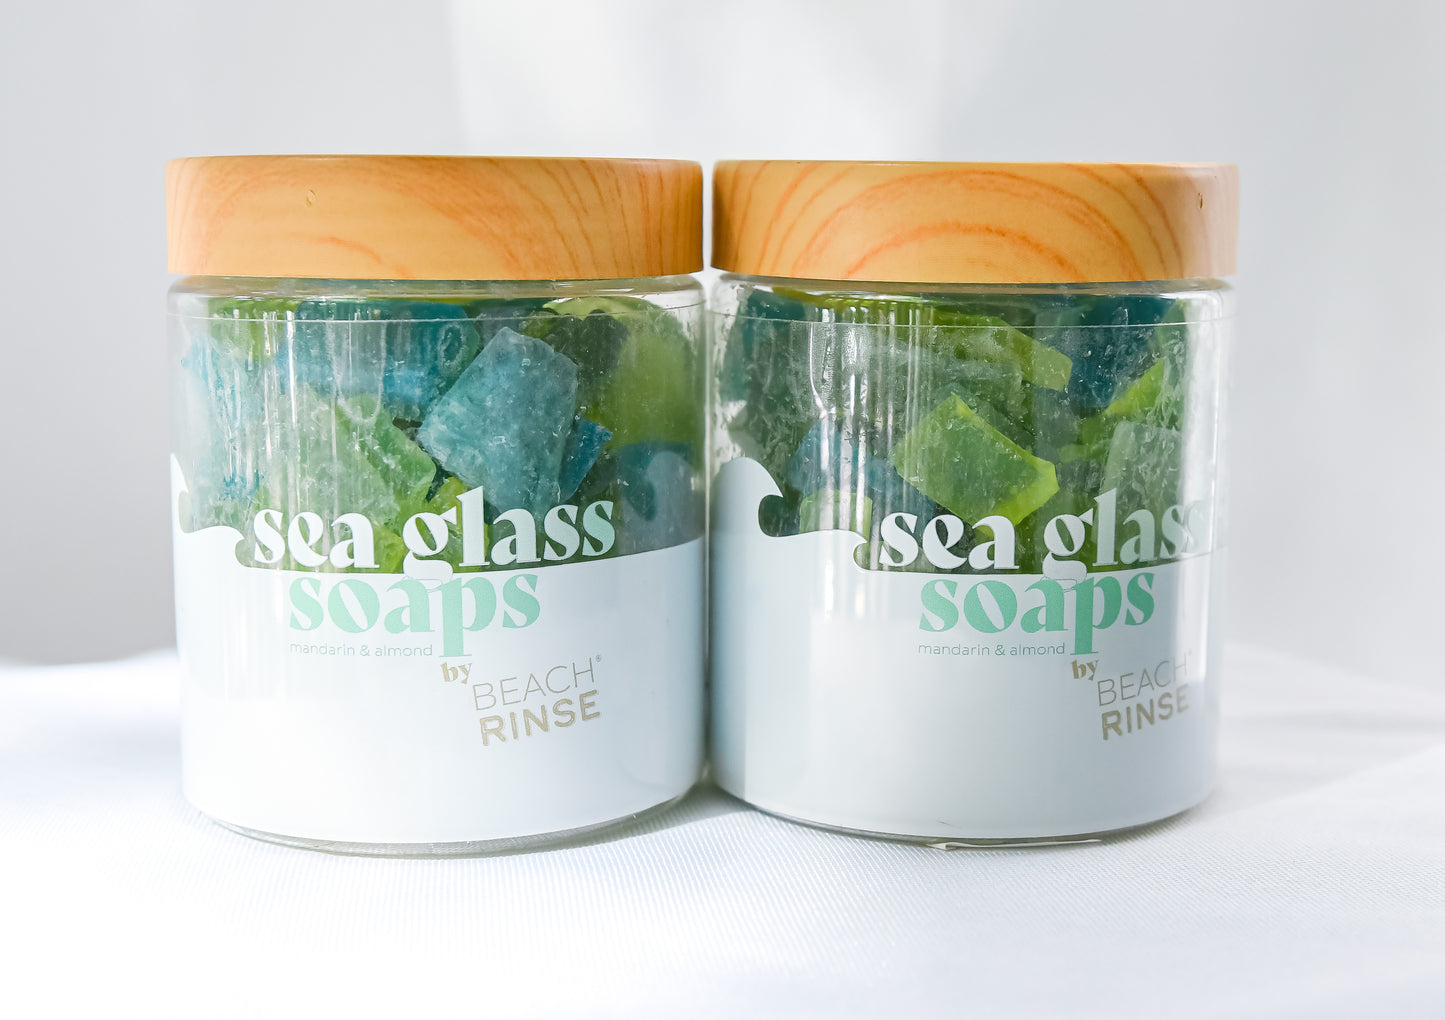 Sea Glass Soaps